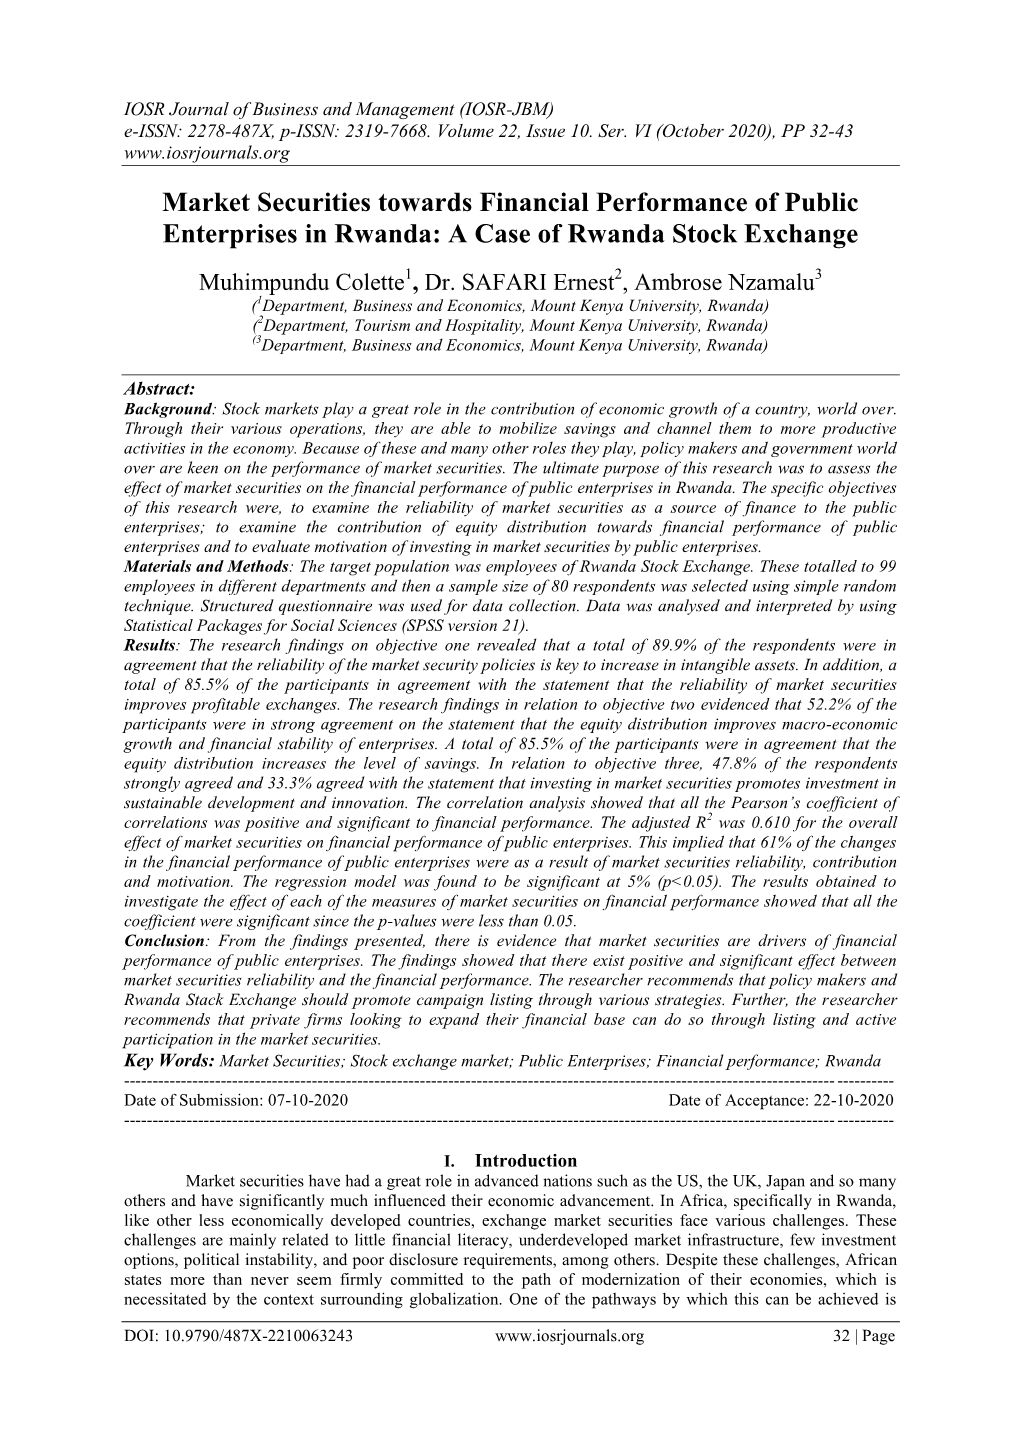 Market Securities Towards Financial Performance of Public Enterprises in Rwanda: a Case of Rwanda Stock Exchange